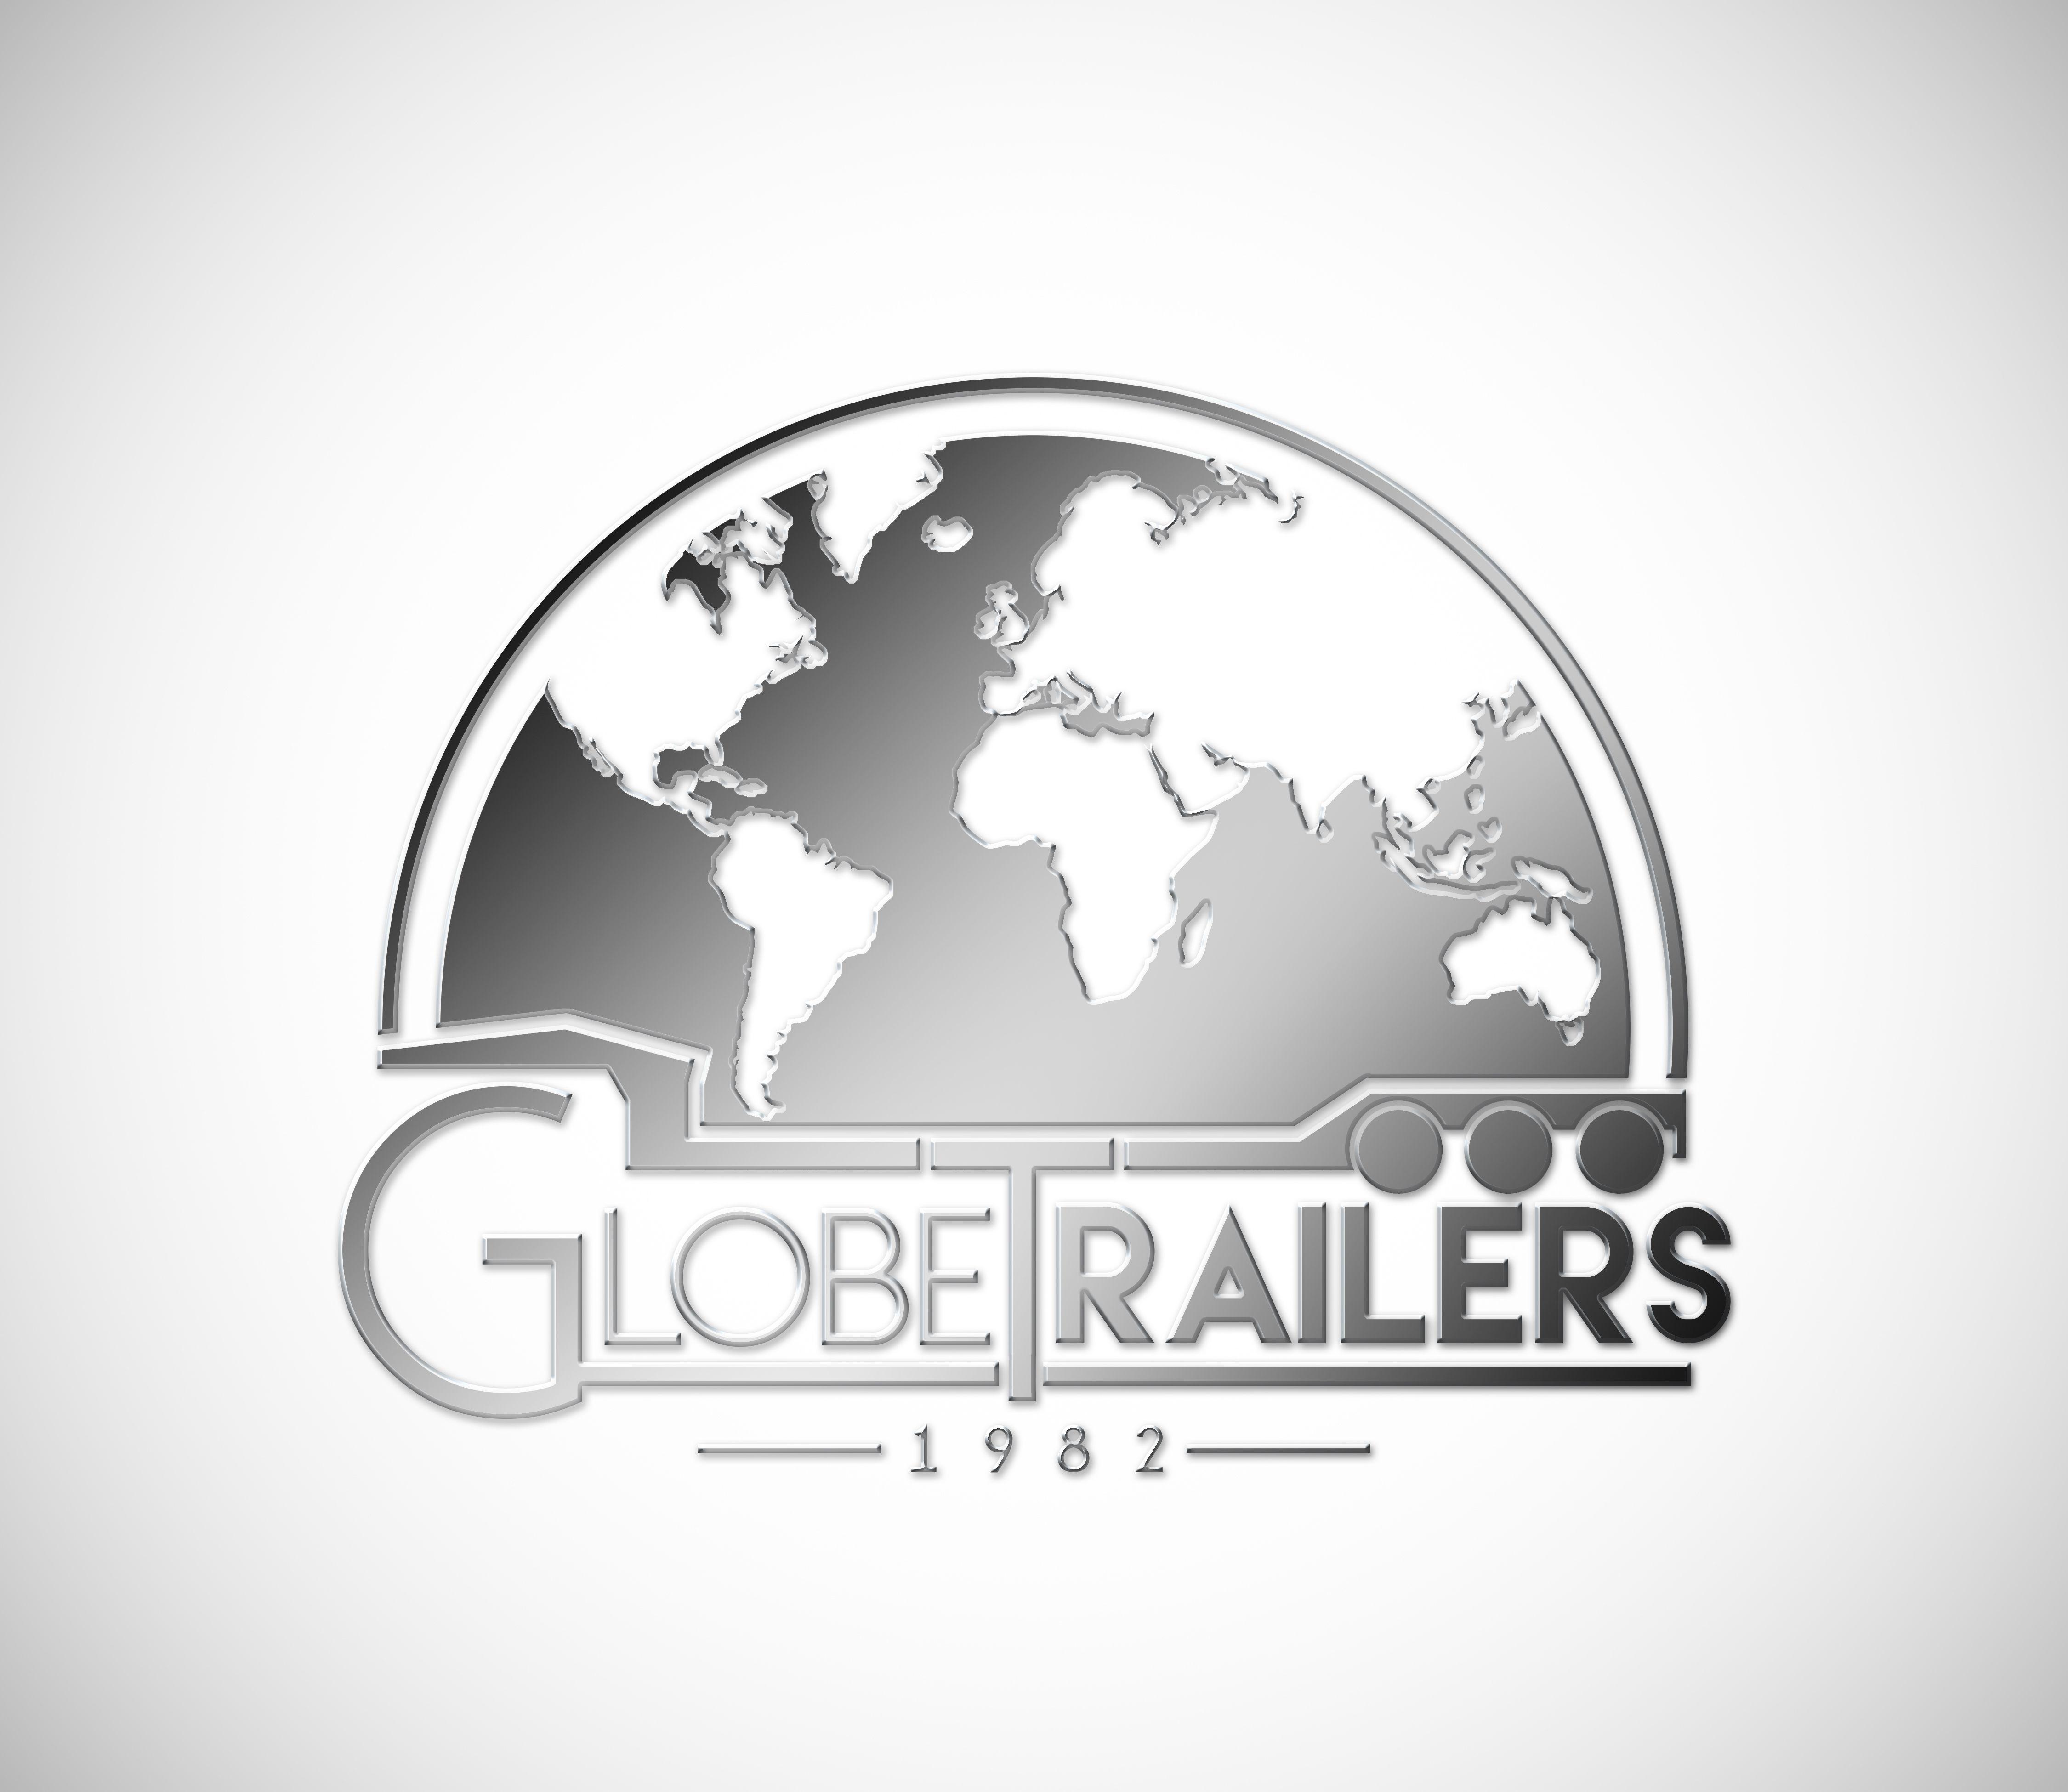 Globe Trailers Logo - Logo Design #106 | 'Globe Trailers' design project | DesignContest ®